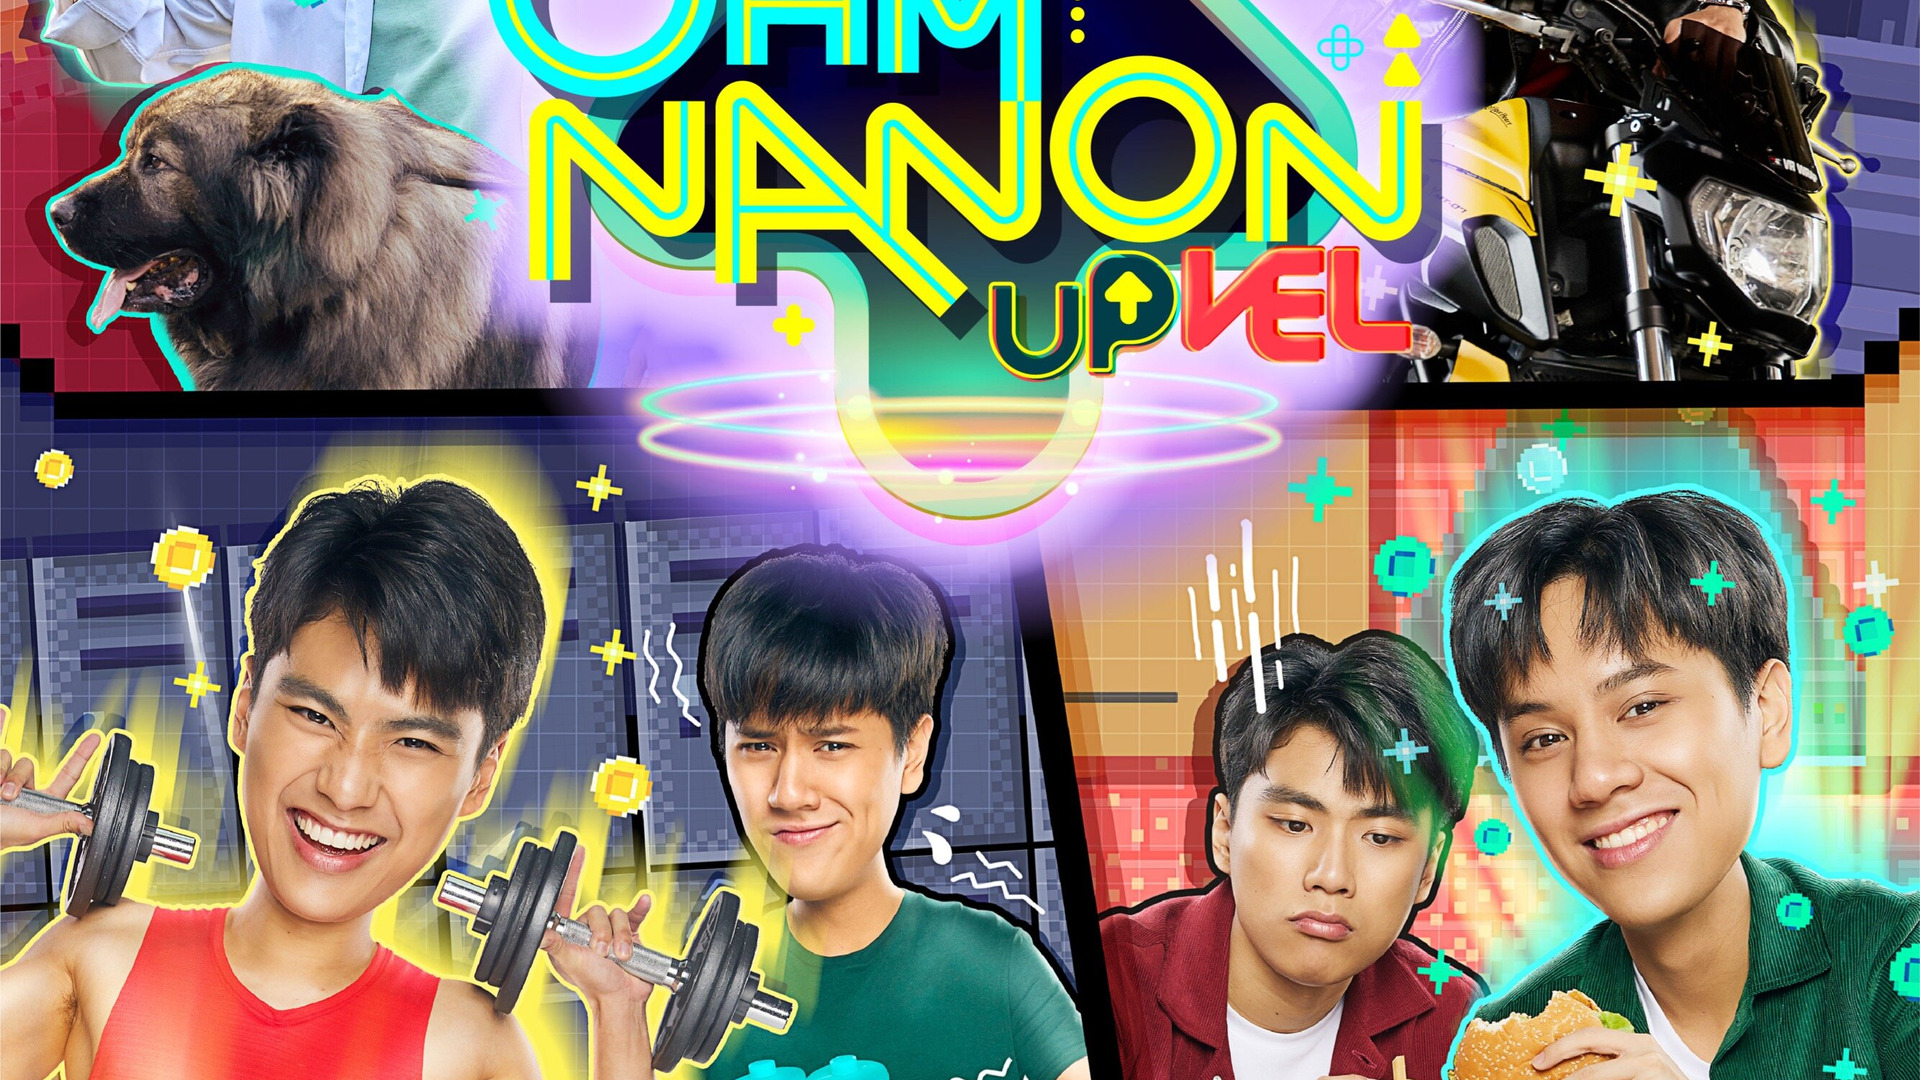 Show Ohm Nanon Upvel